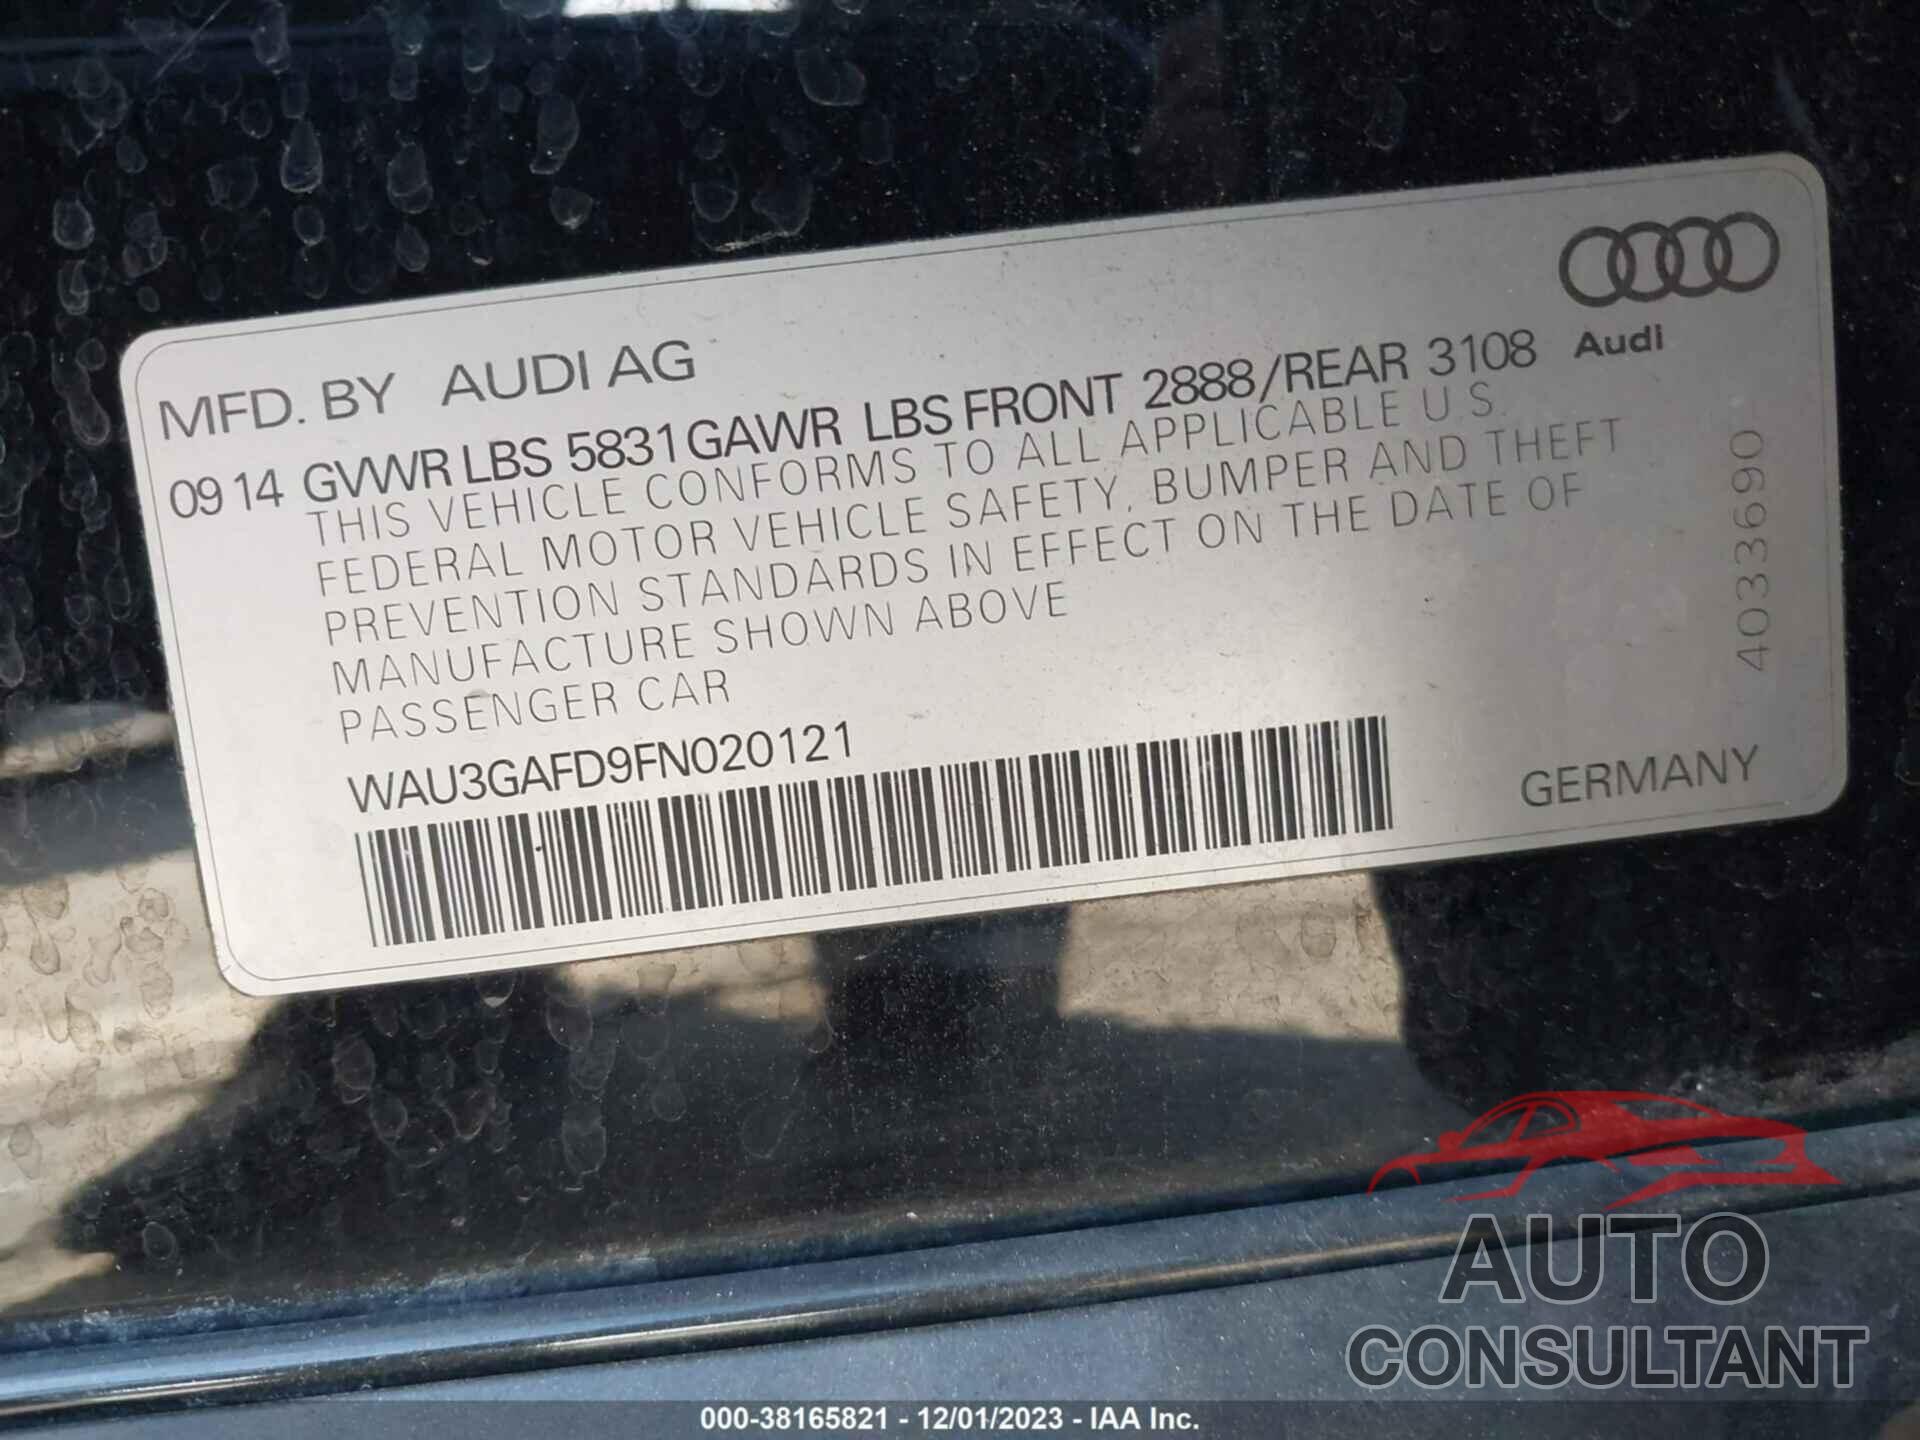 AUDI A8 L 2015 - WAU3GAFD9FN020121